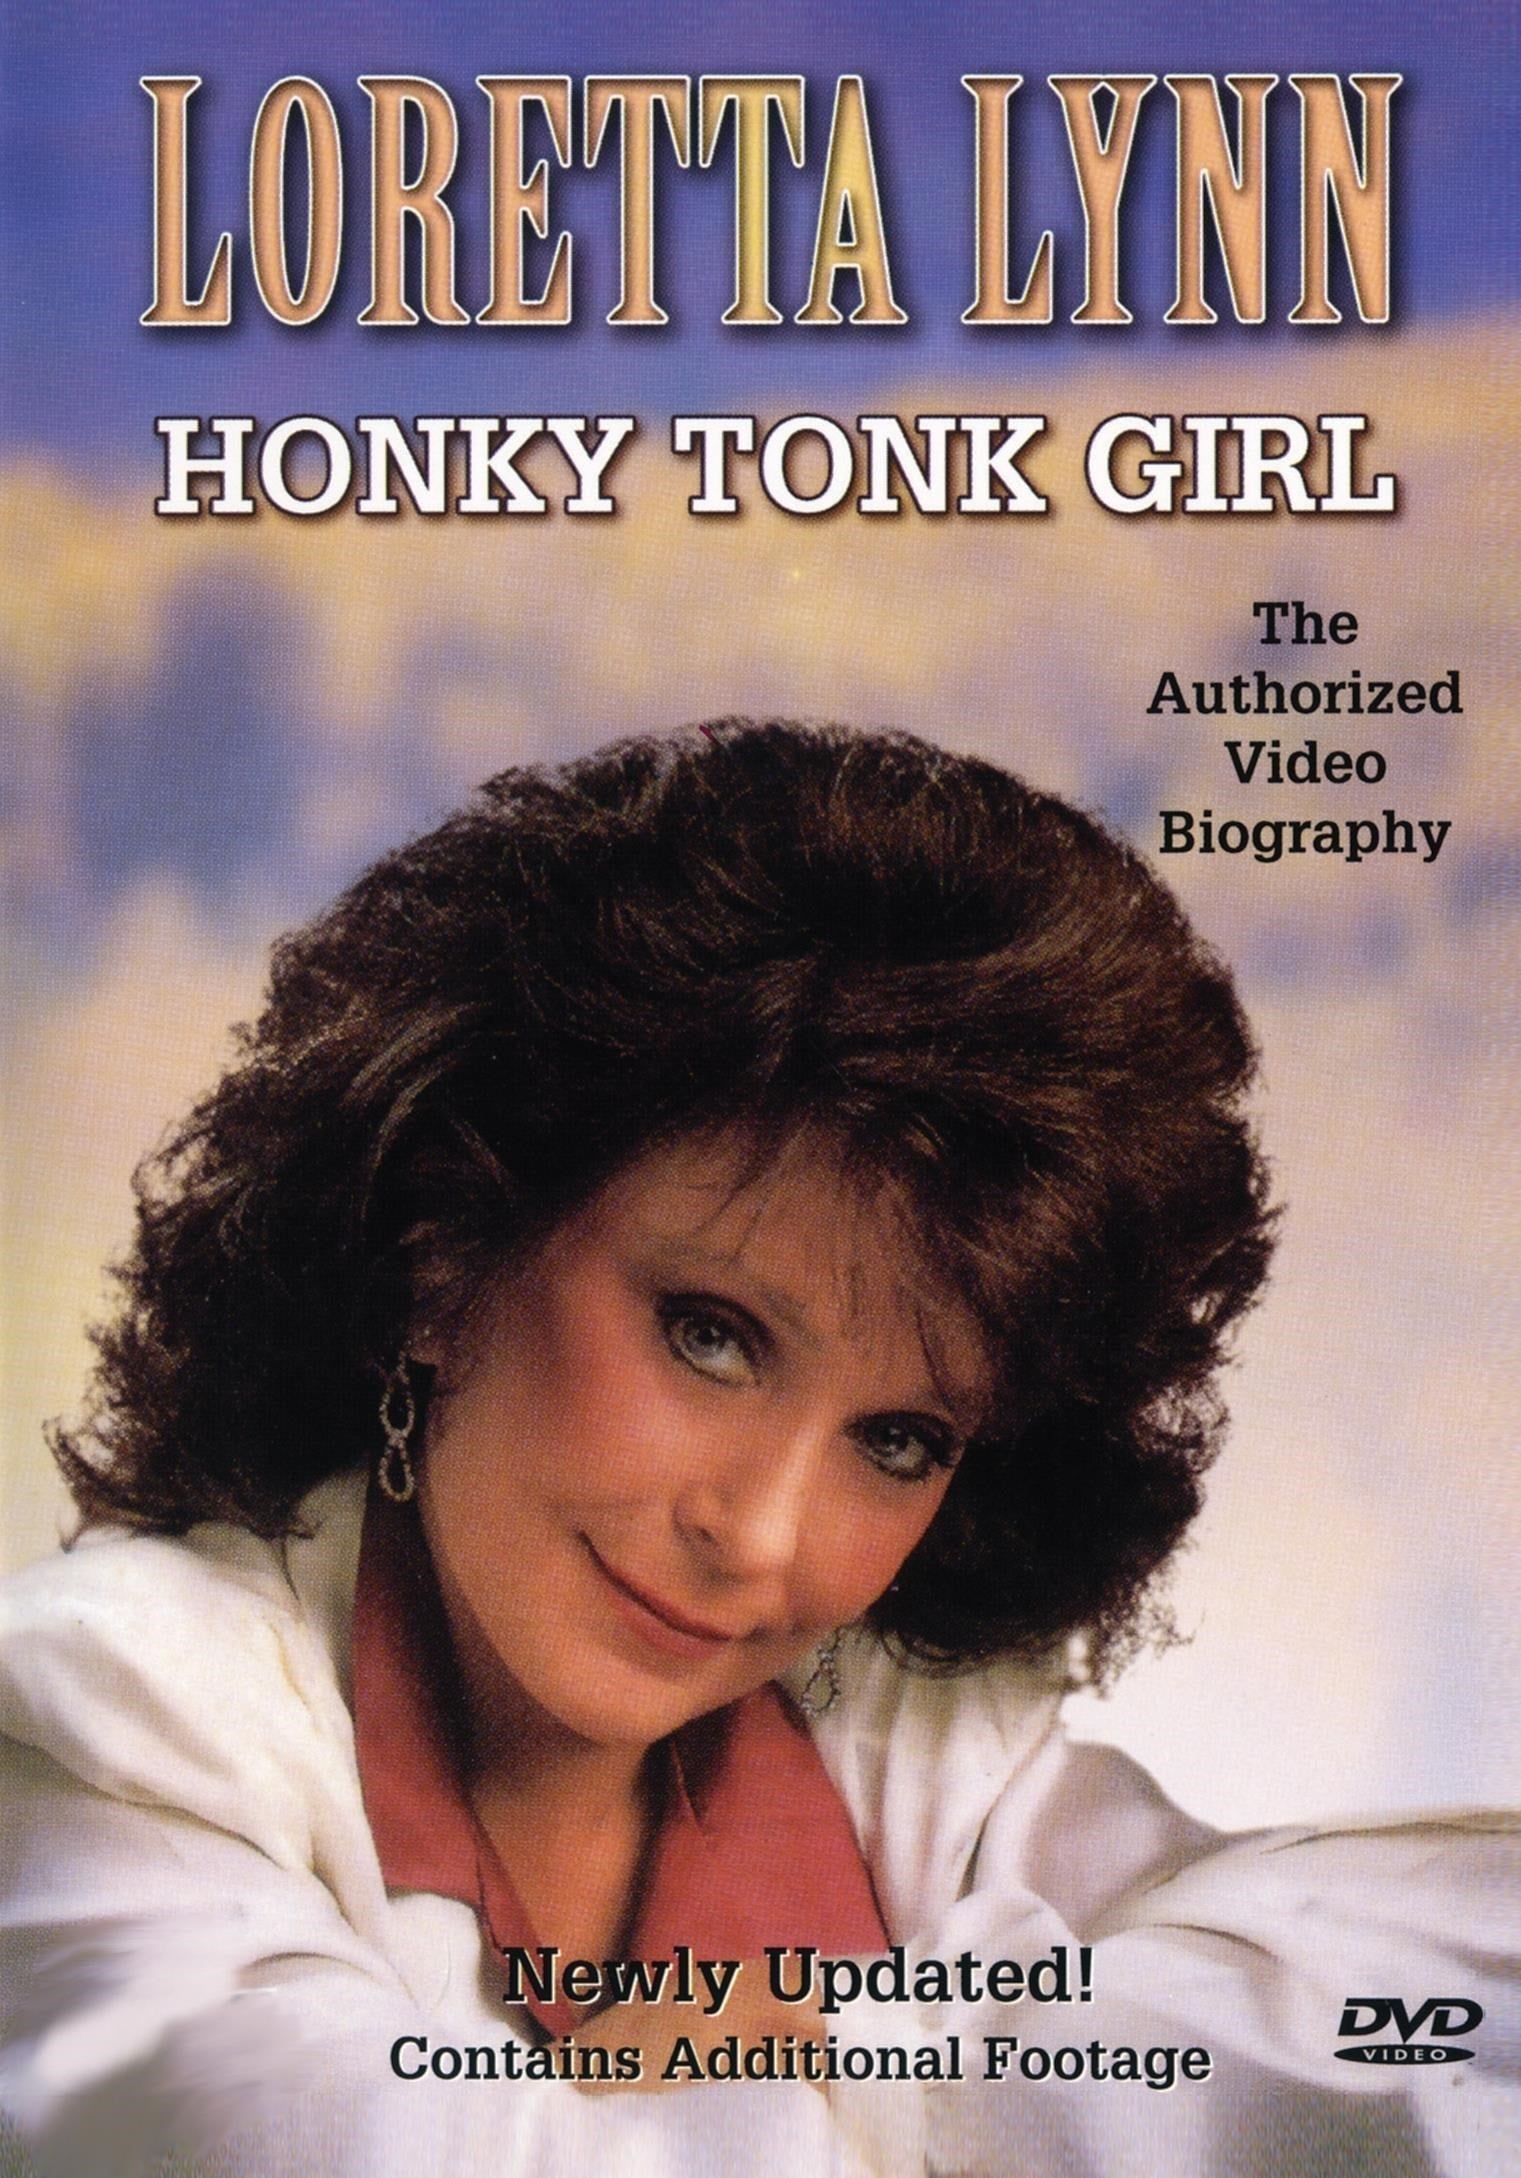 Loretta Lynn : Honky Tonk Girl rareandcollectibledvds